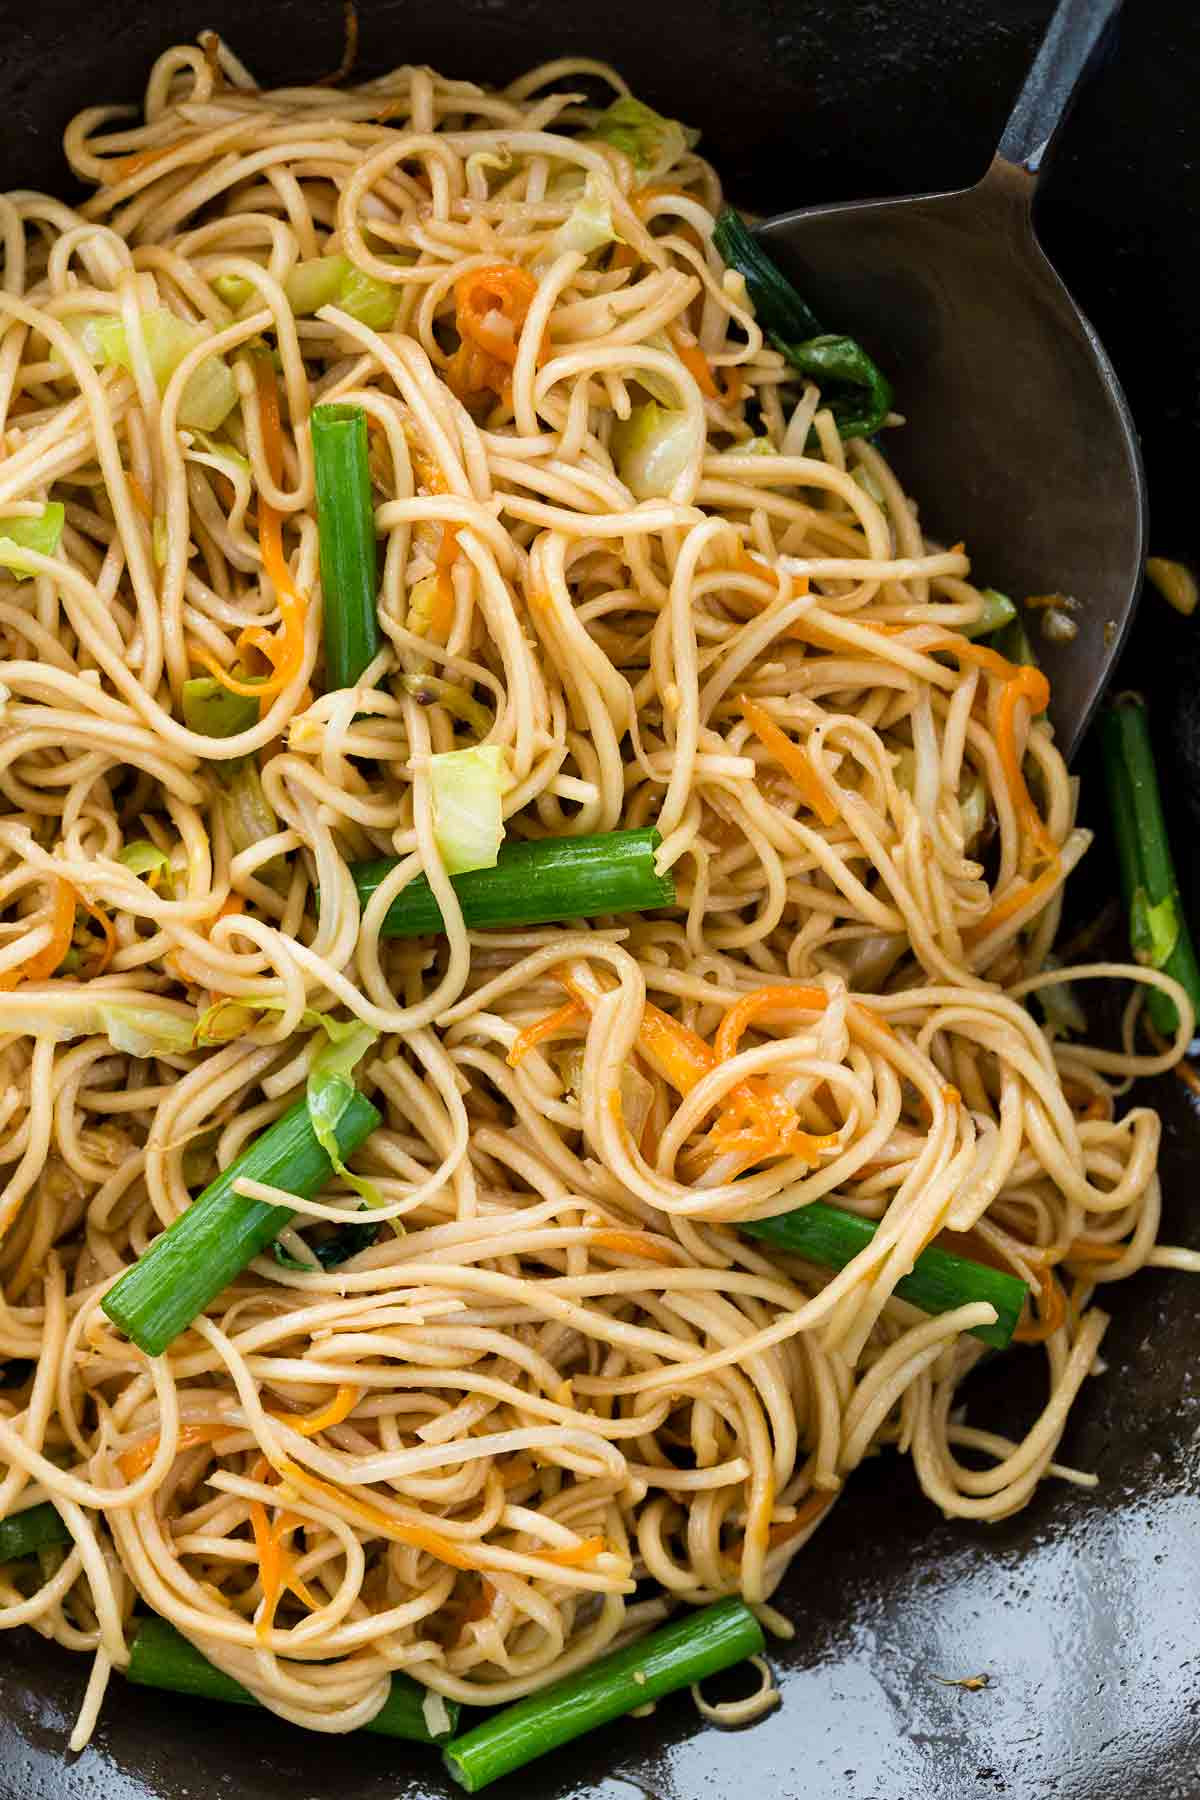 Chow Mein Noodles
 Chow Mein Recipe Jessica Gavin